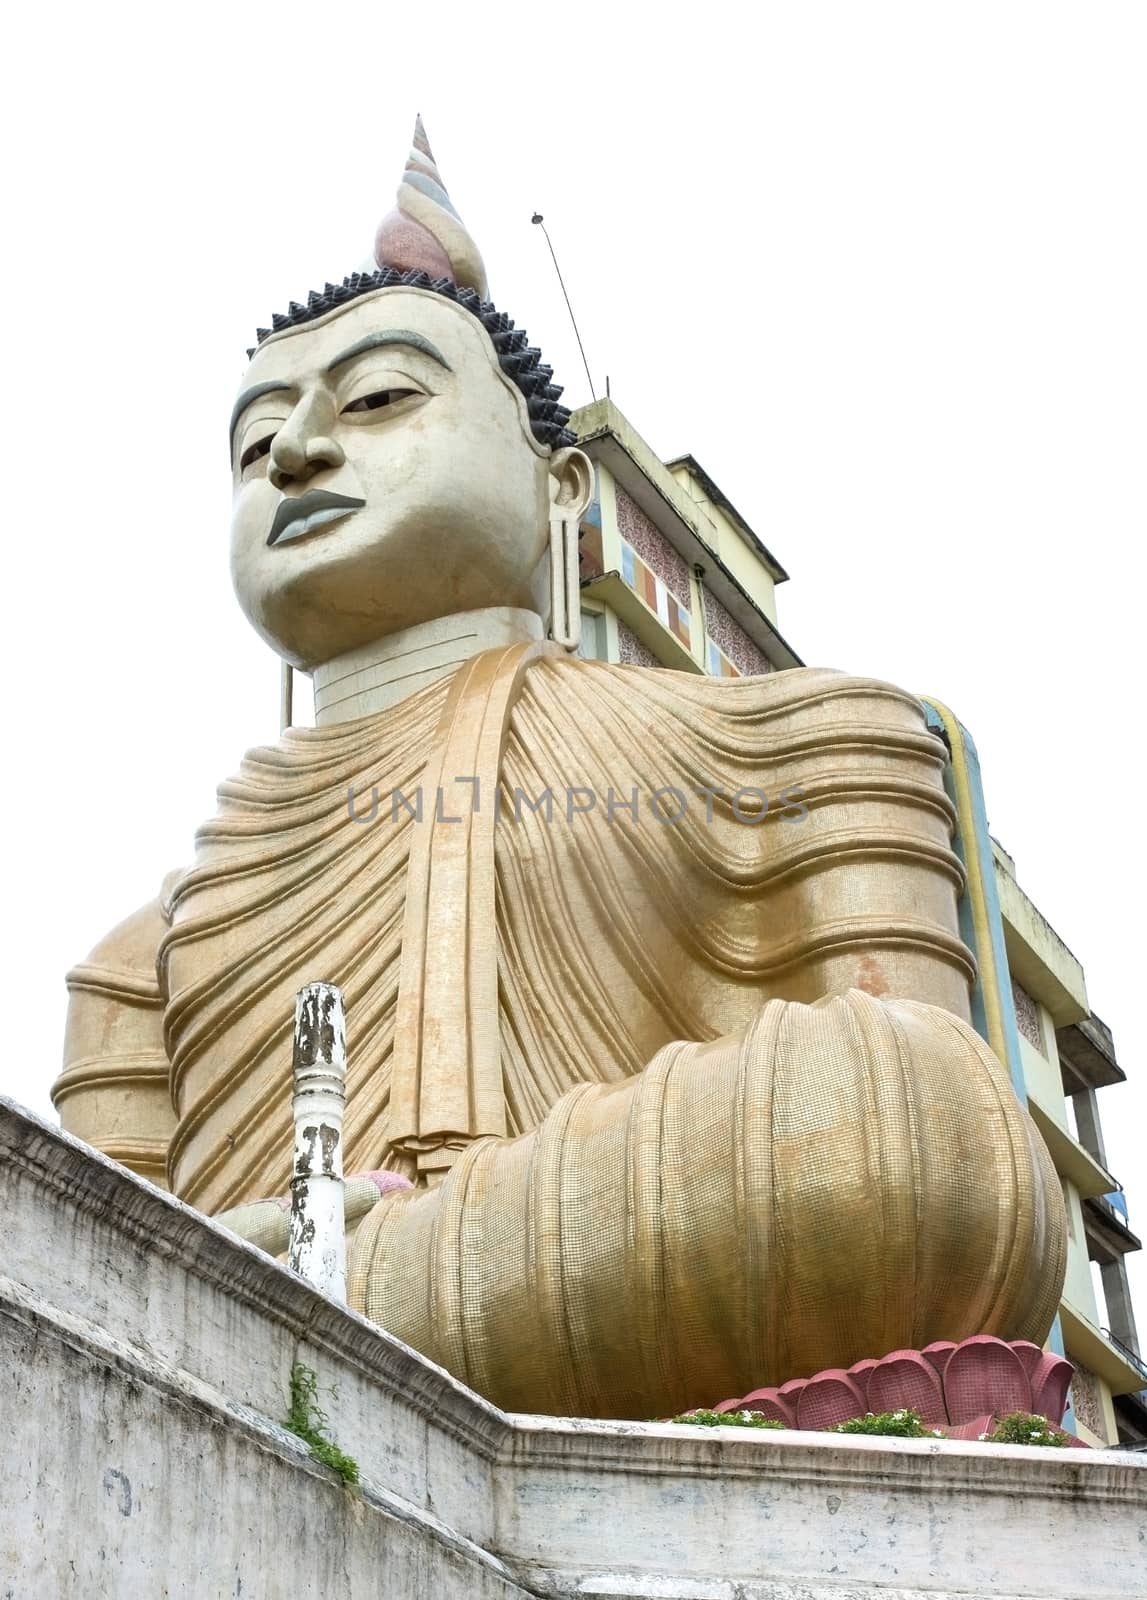 DICKWELLA, SOUTHERN PROVINCE, SRI LANKA - DECEMBER 20 2014: Sri Lanka's largest seated Buddha statue in Dickwella is 50 metres (160 ft) tall. Buddha and statues in buddhist monastery Wewurukannala Vihara near Dikwella, Sri Lanka. Dickwella, Southern Province, Sri Lanka, Asia.